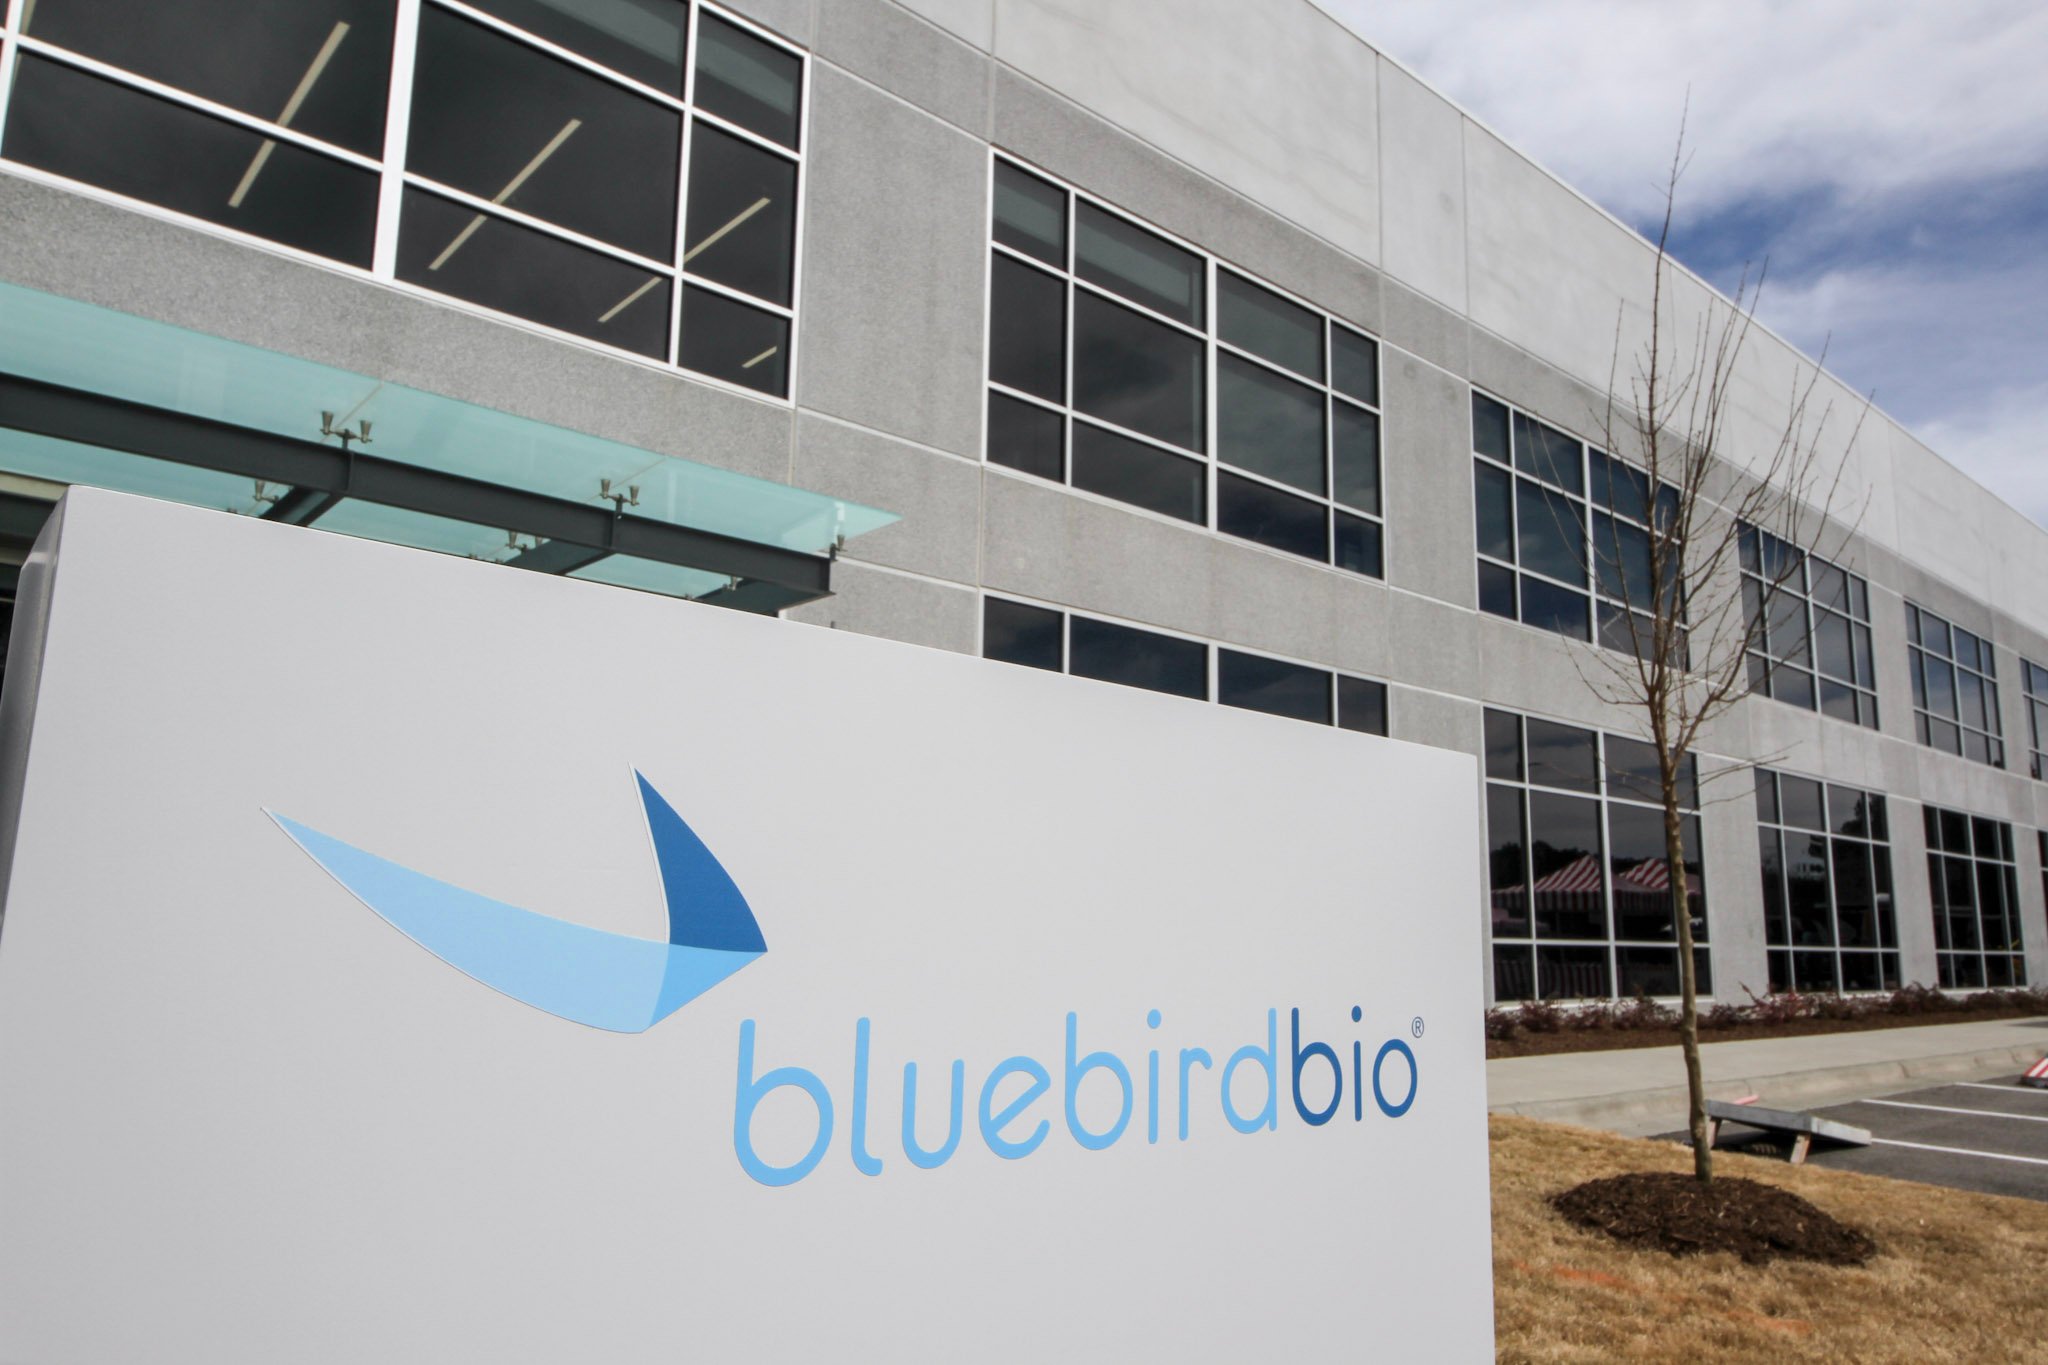 CellsBluebird Bio site in Durham North Carolina 